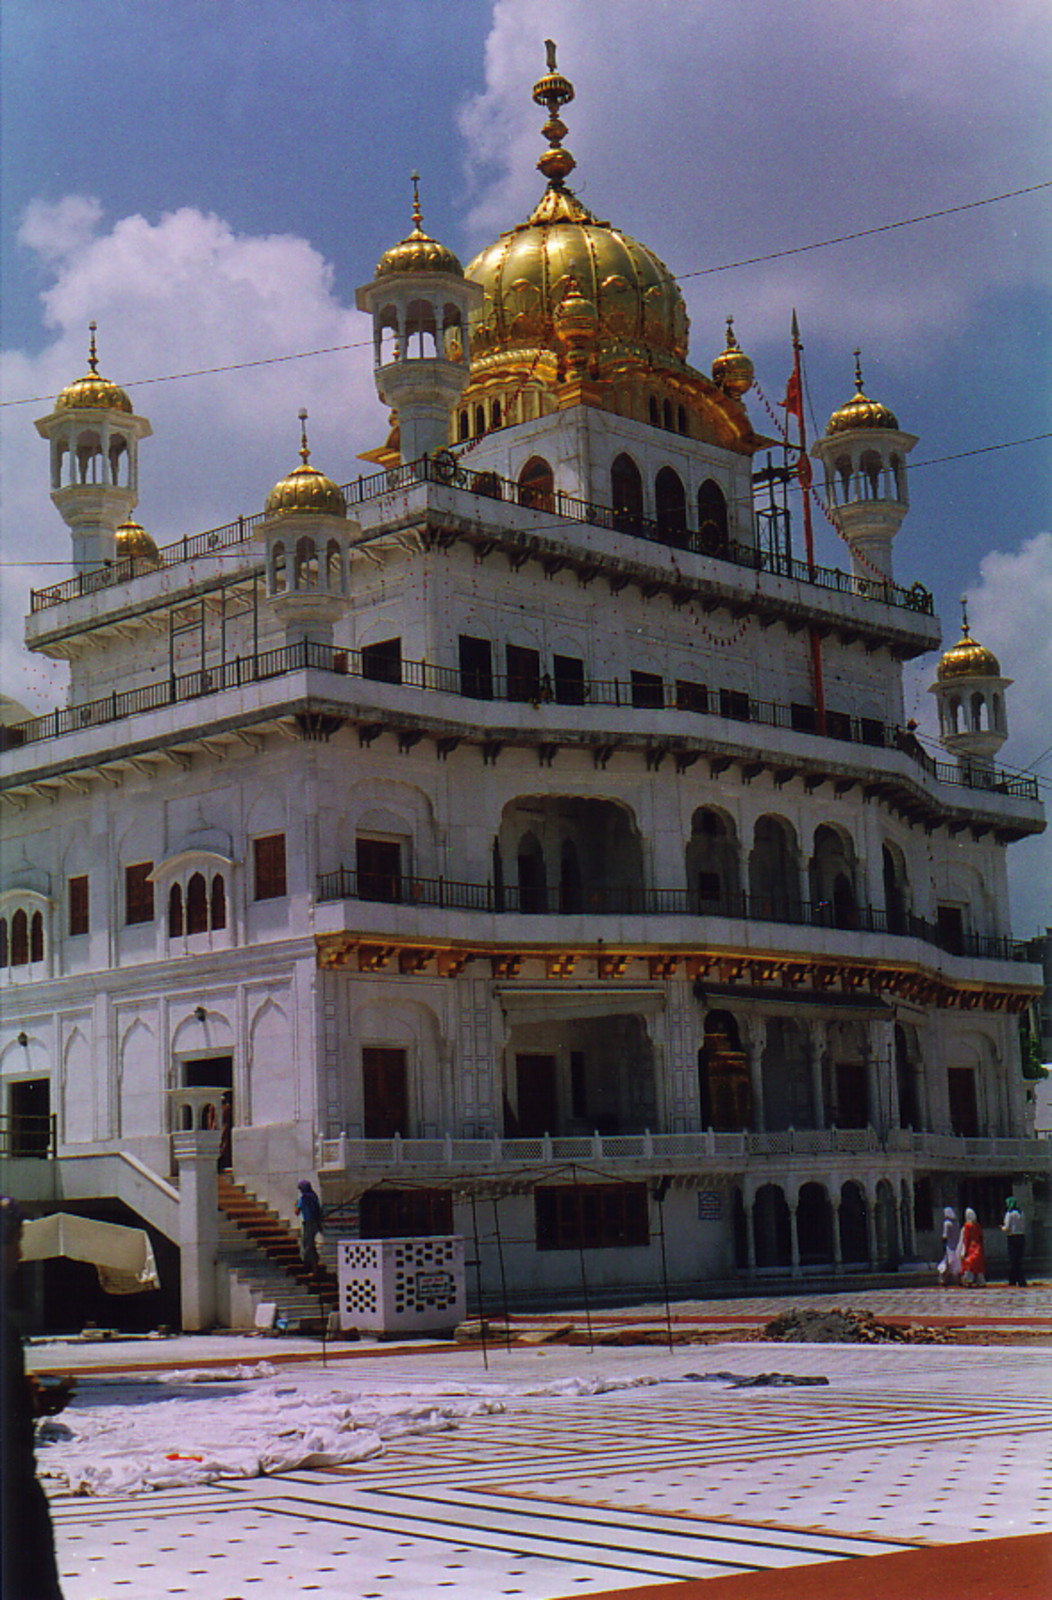 The Sri Akal Takhat Sahib building